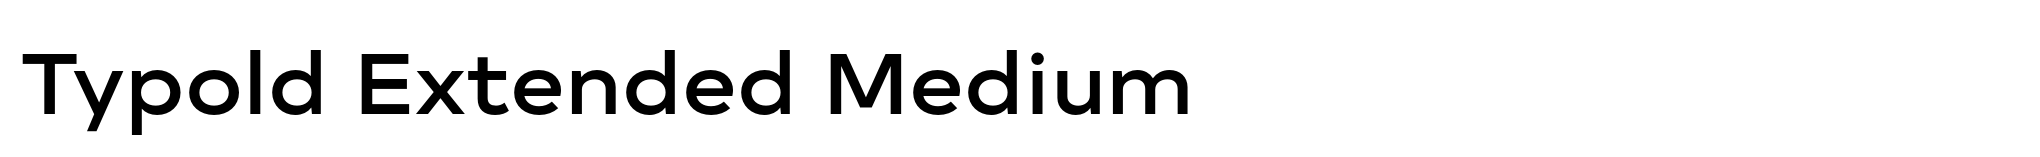 Typold Extended Medium image